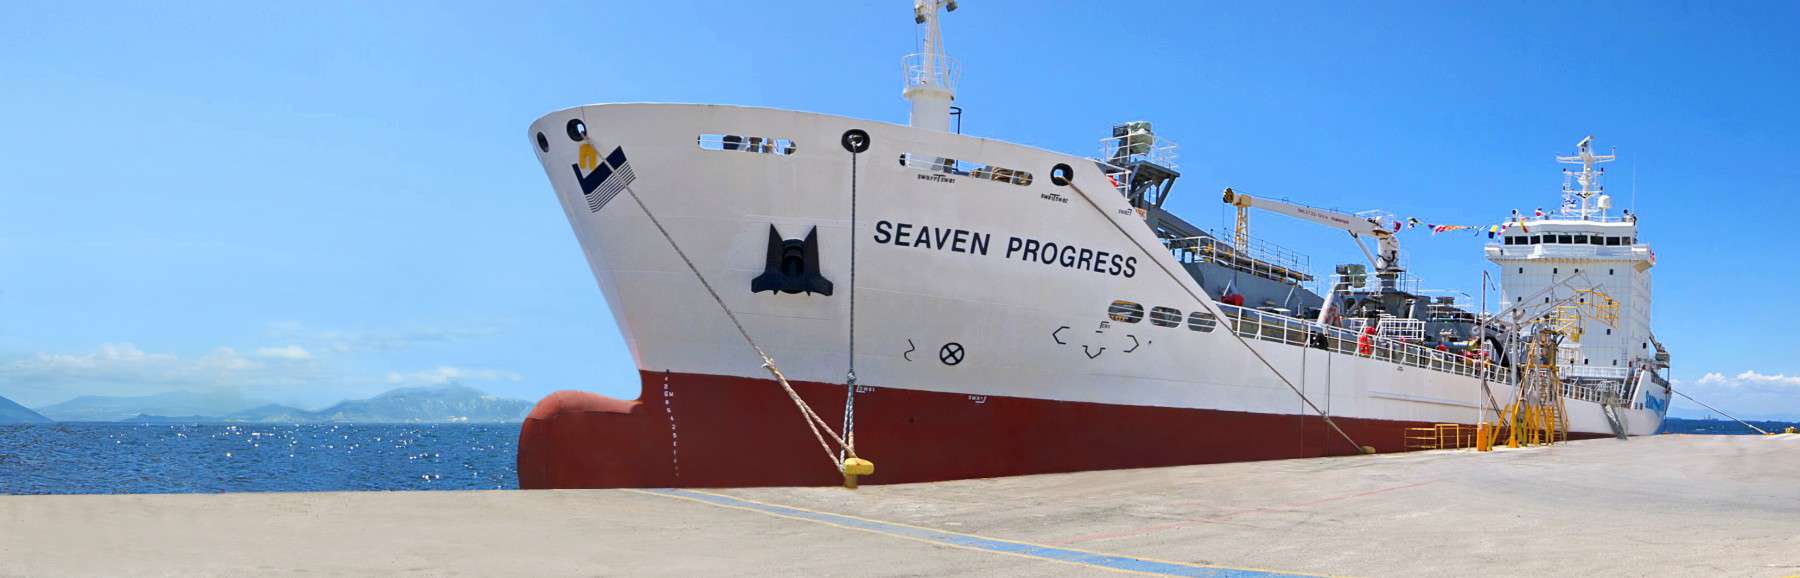 M/V SEAVEN PROGRESS: Το νέο πλοίο της Seaven